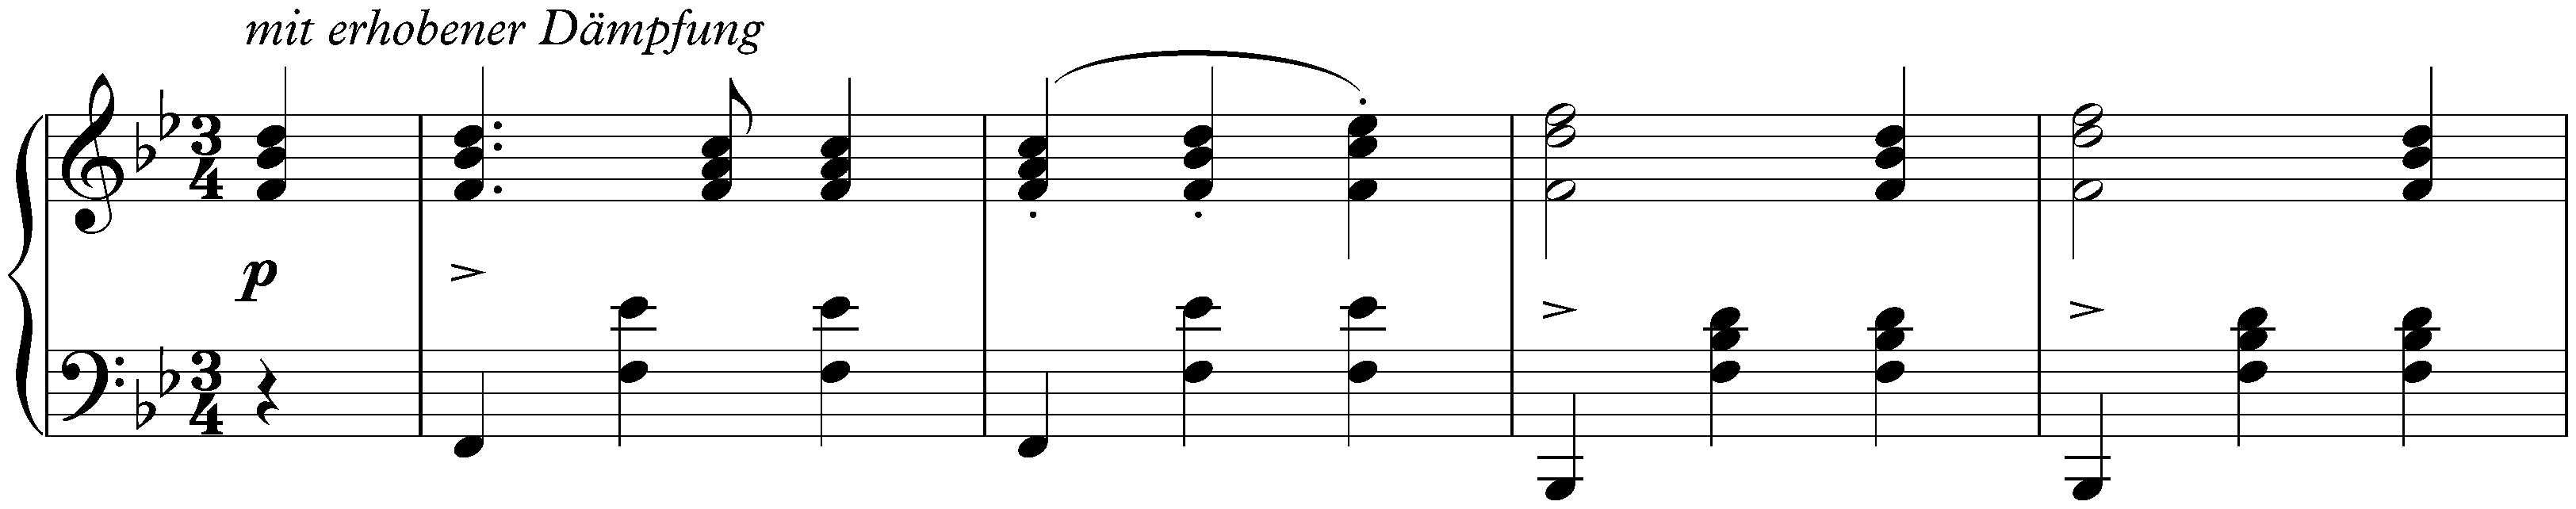 Sixteen deutsche Tänze and two Ecossaises, D 783; 7. Sixteen deutsche Tänze, no. 7 in B-flat major